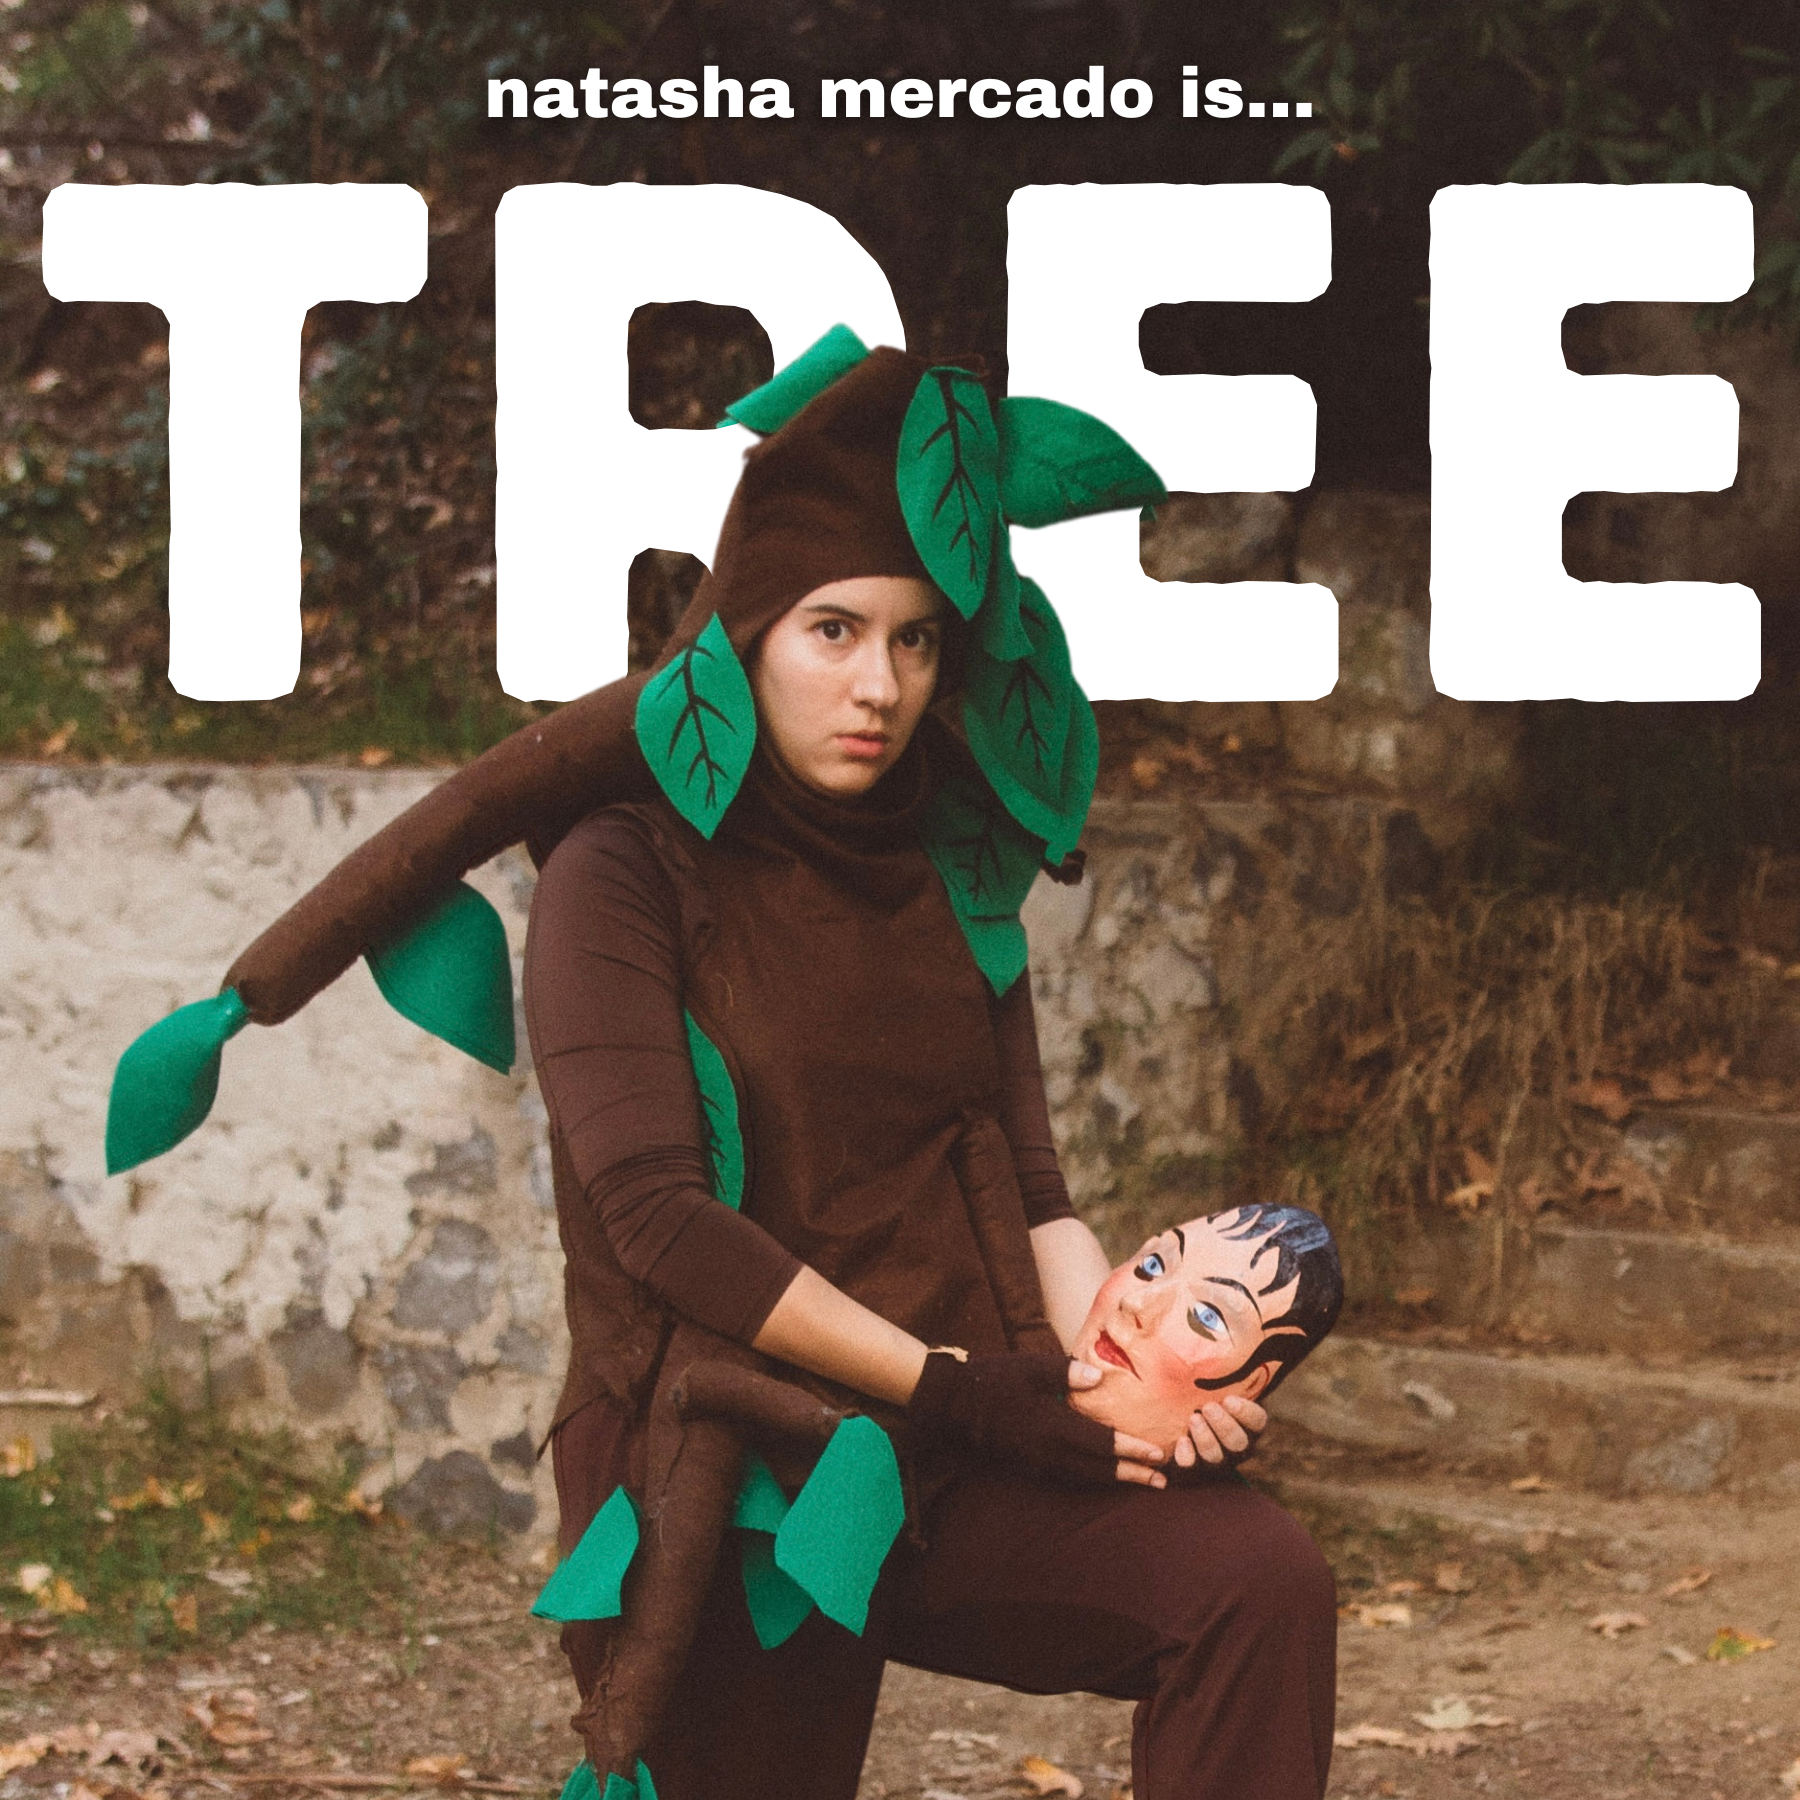 Photo of Natasha Mercado in her Tree Costume holding a "human mask" in nature. Above her, the words-- "natasha mercado is... TREE"